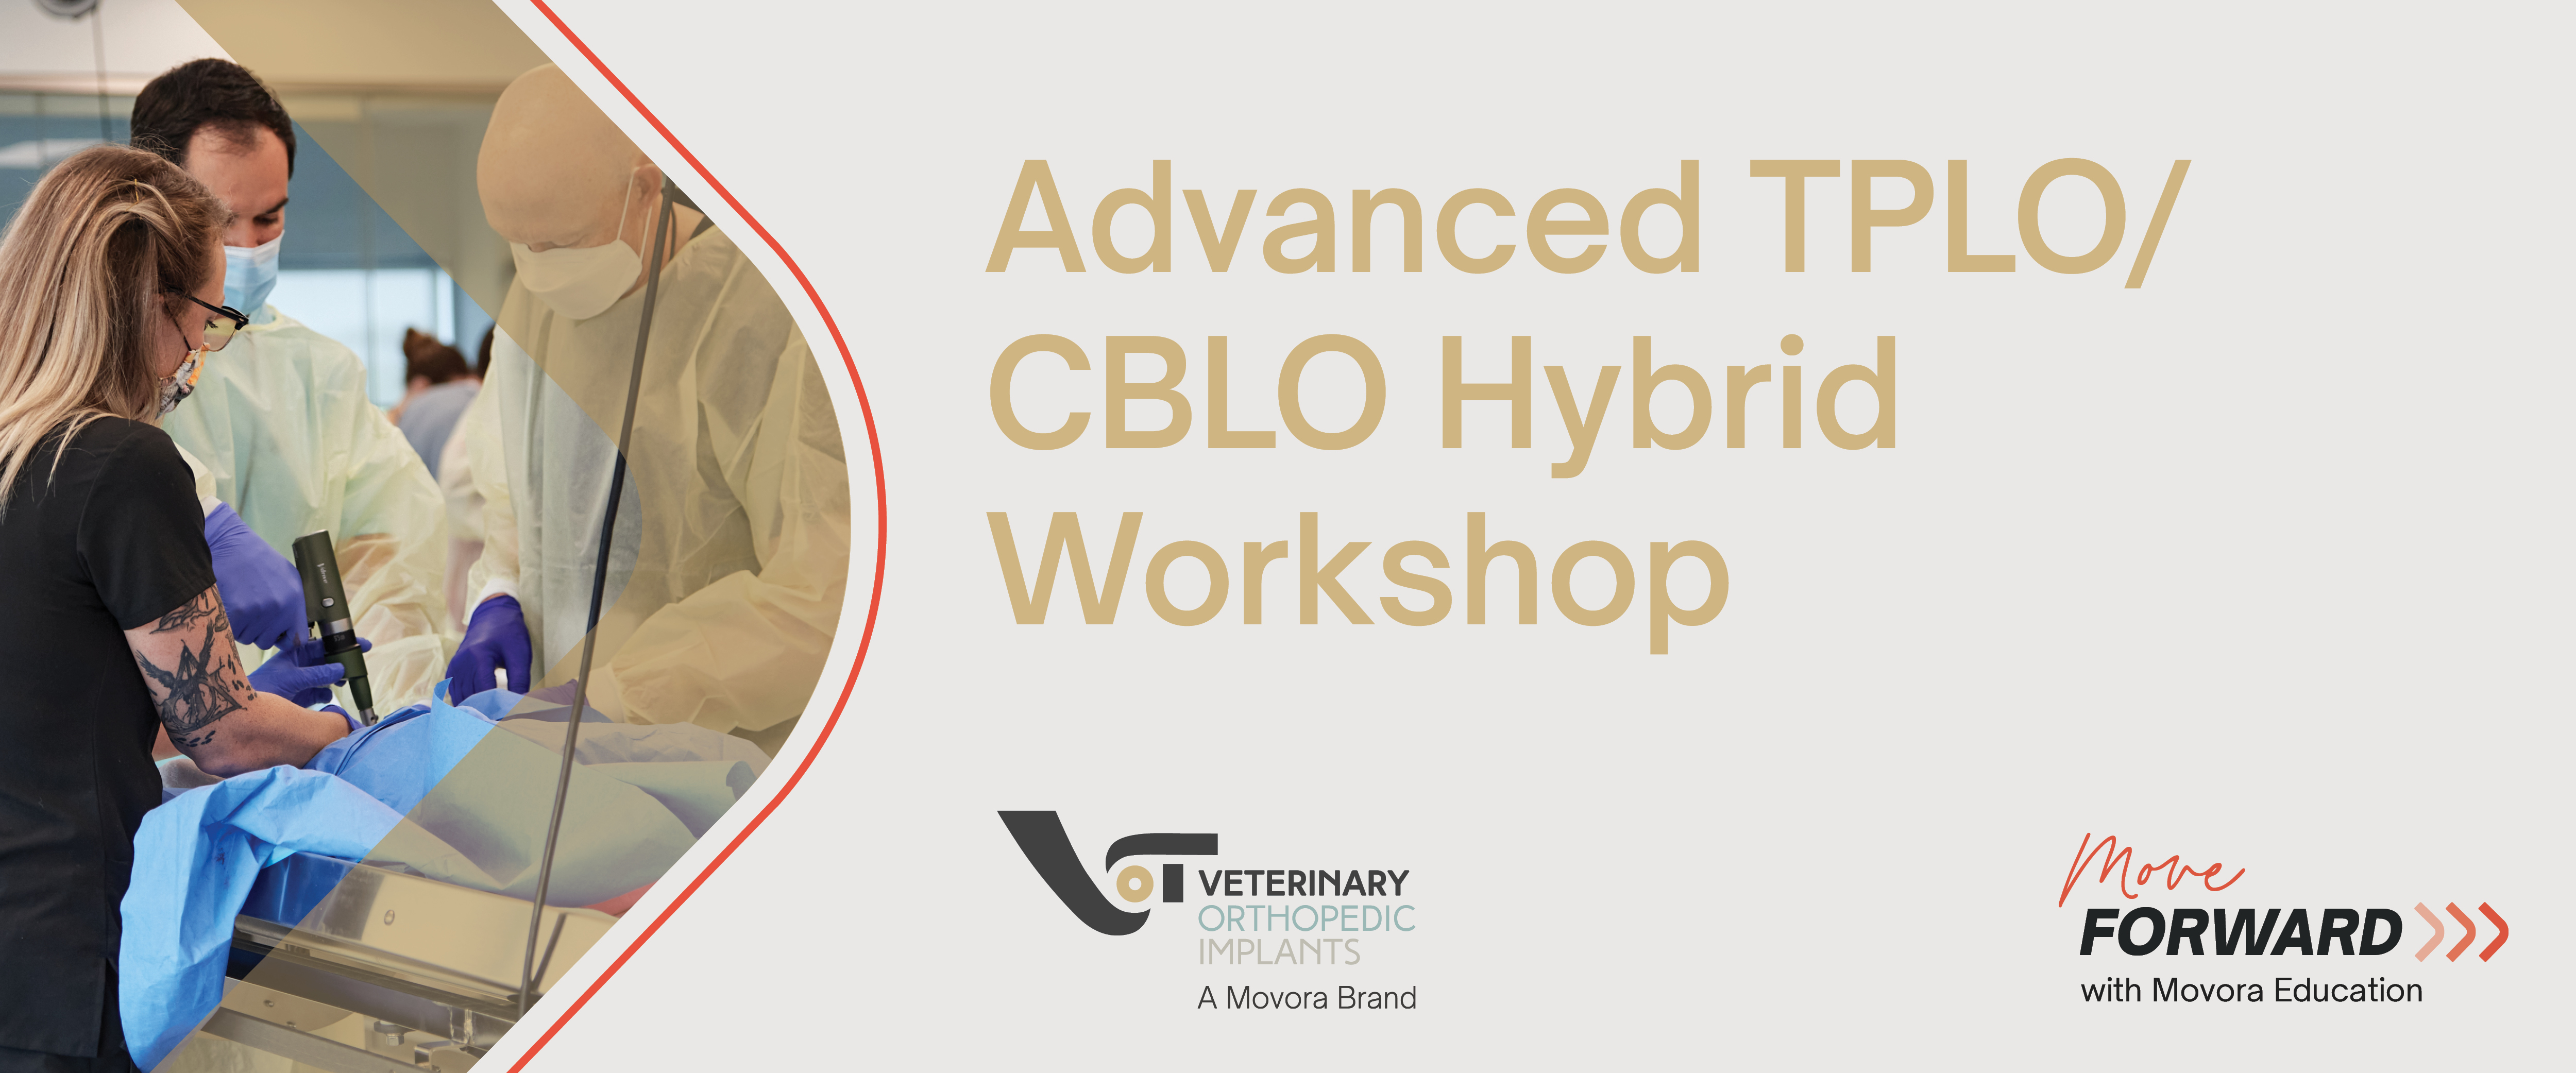 Advanced TPLO / CBLO Hybrid Workshop banner